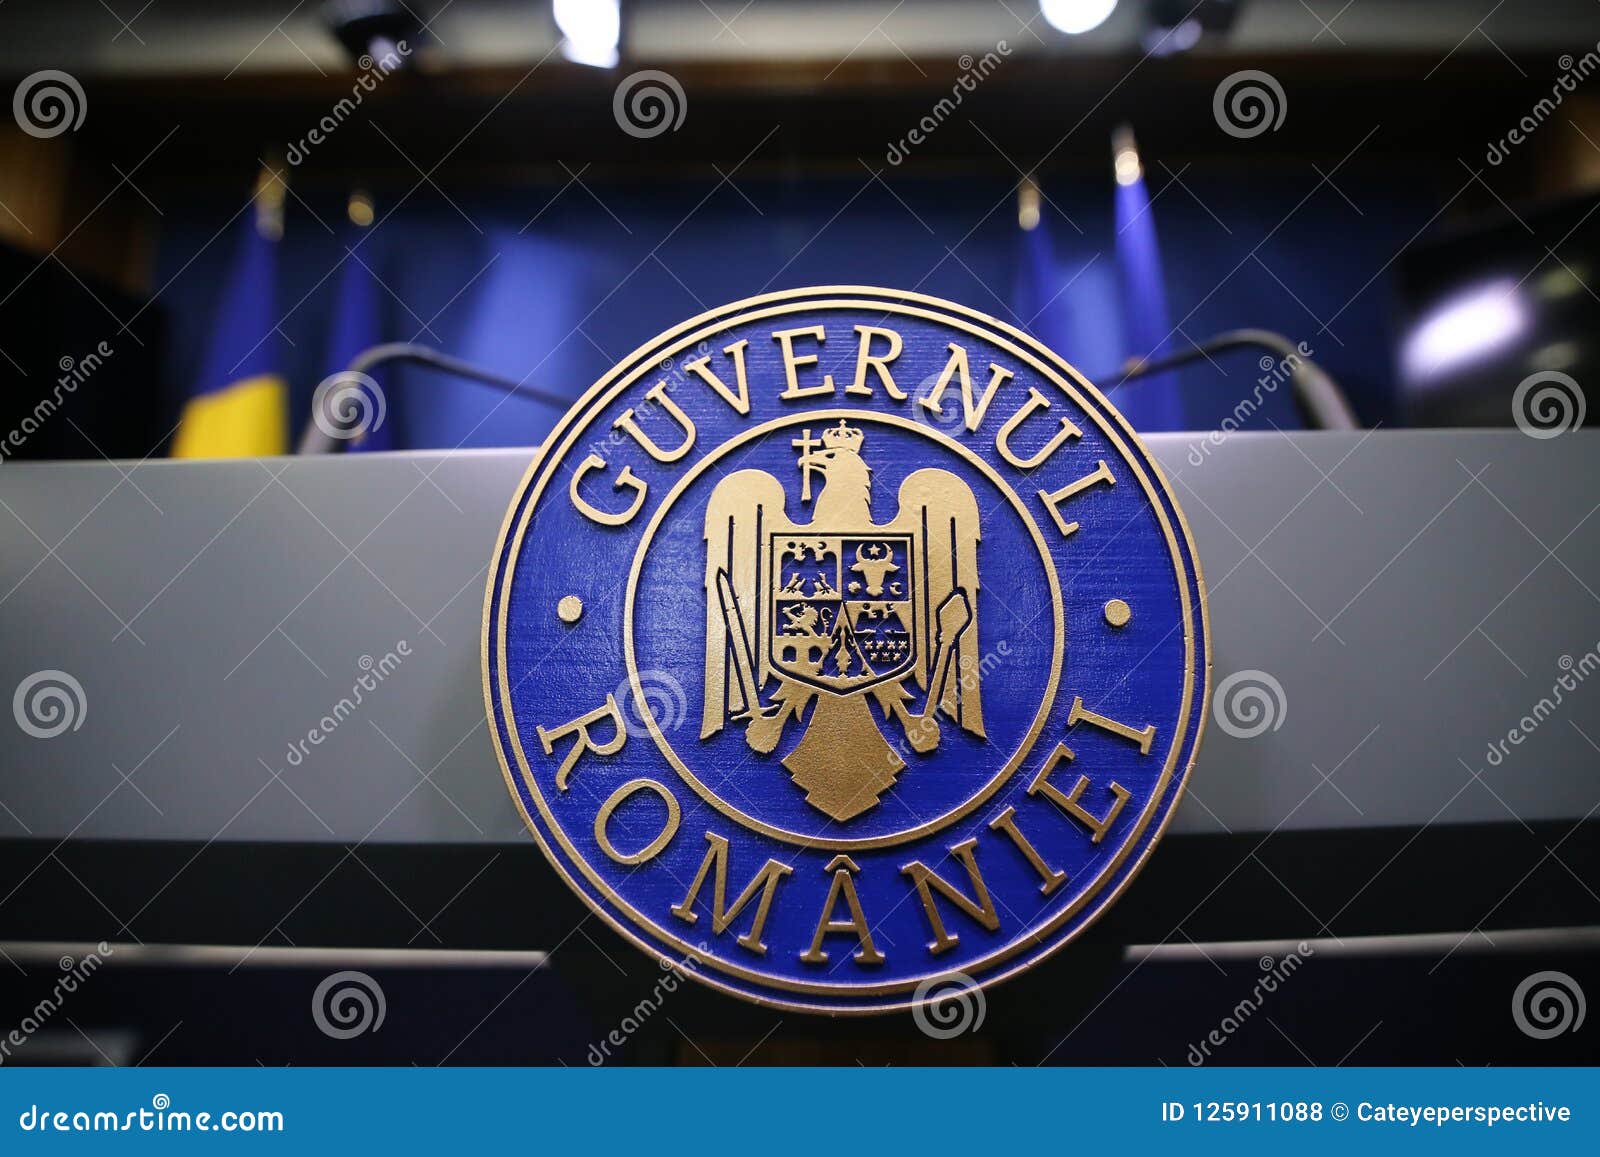 romaniaÃ¢â¬â¢s emblem with the romanian government text